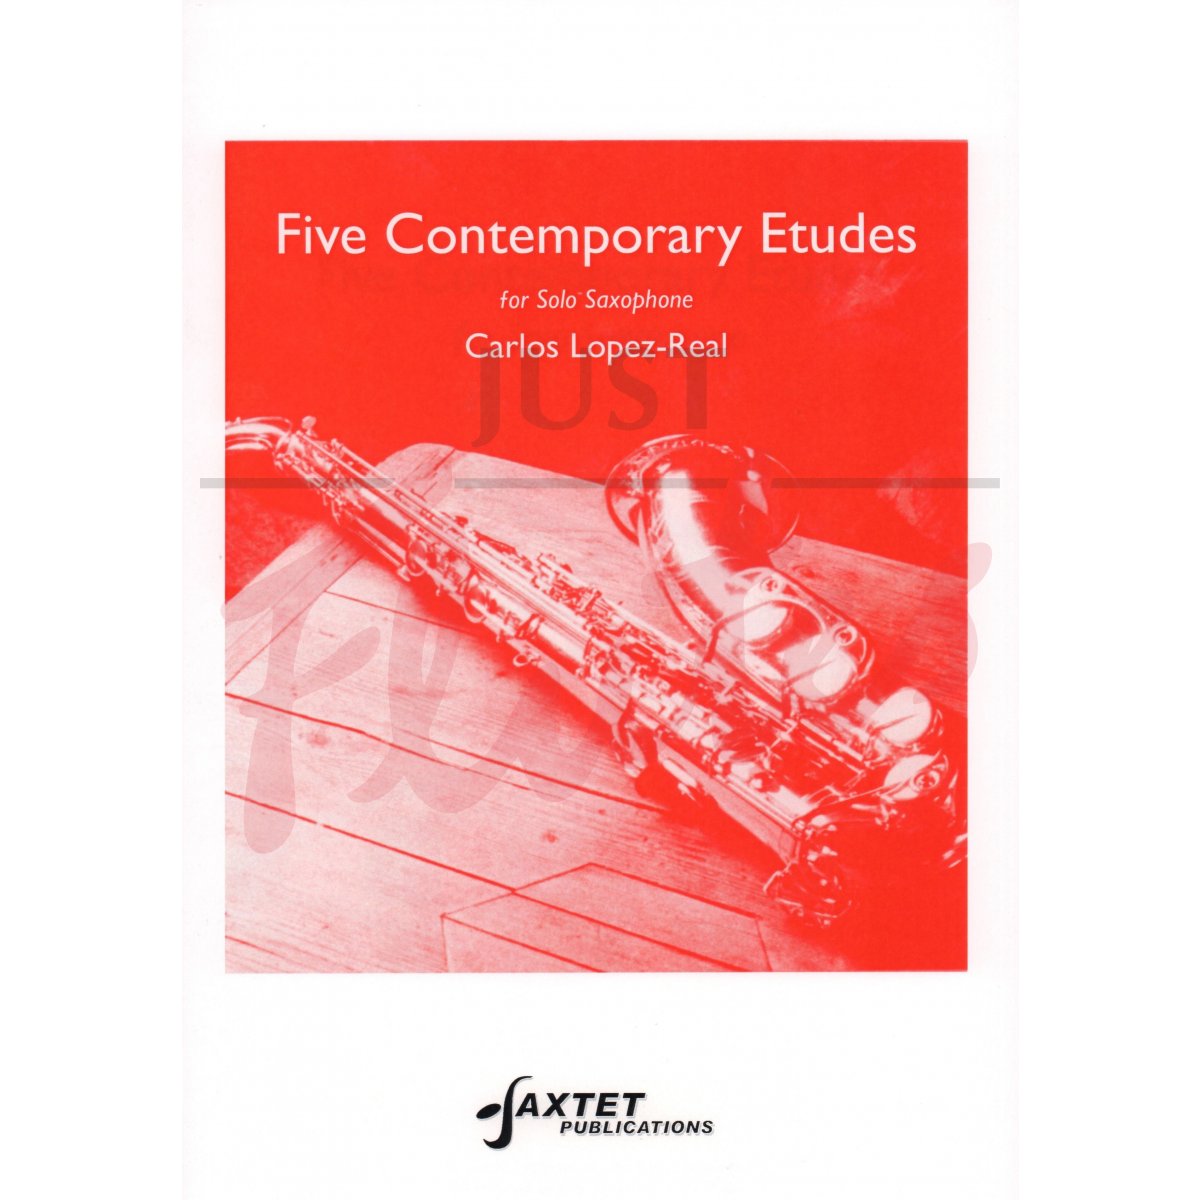 Five Contemporary Etudes for Solo Saxophone